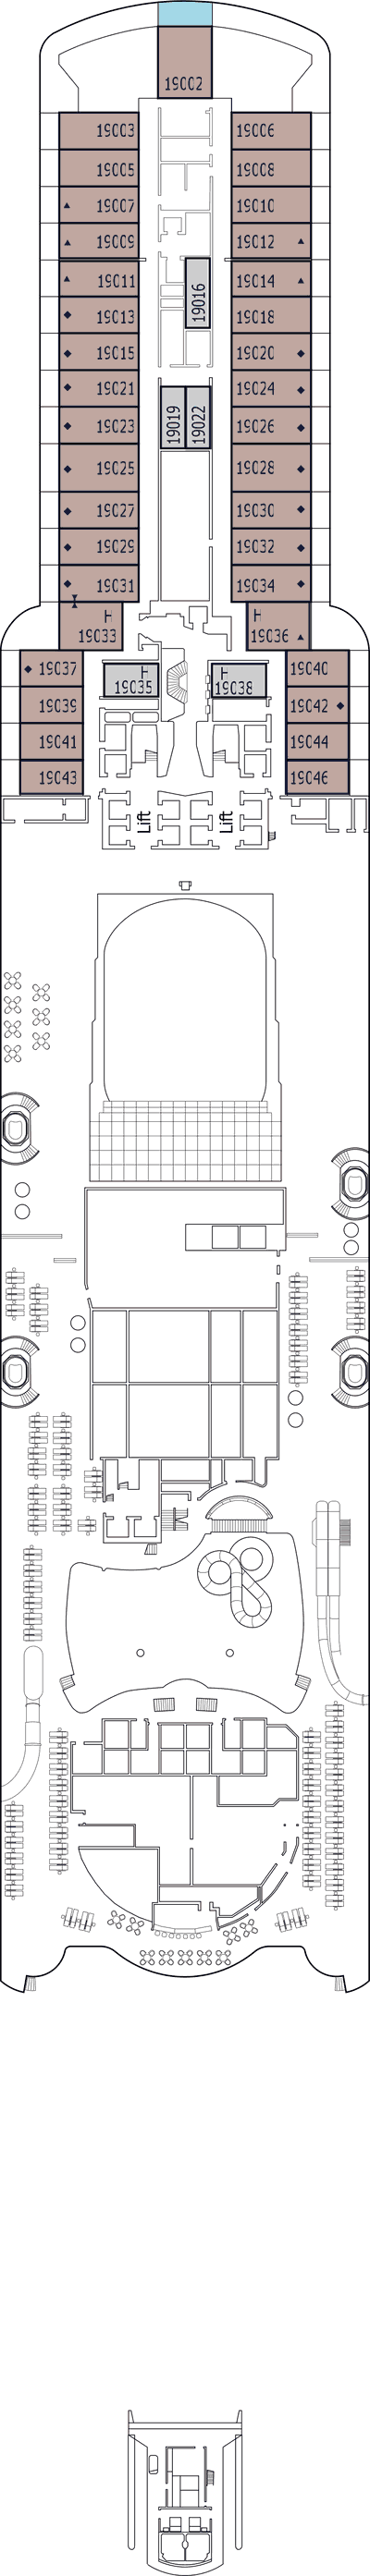 MSC Seashore - Decksplan Deck 19